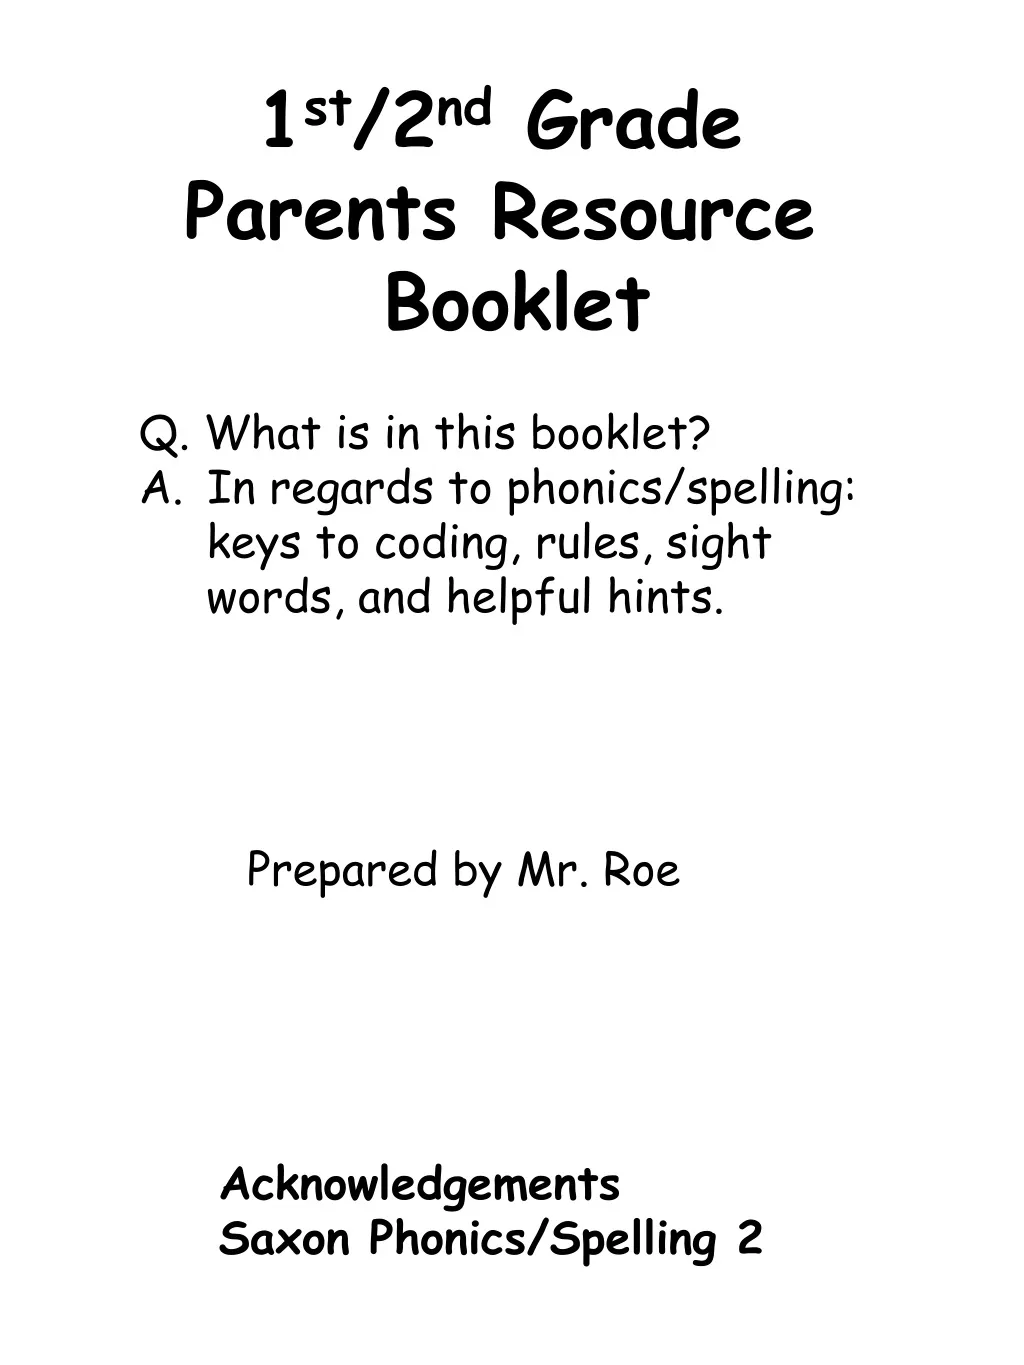 1 st 2 nd grade parents resource booklet